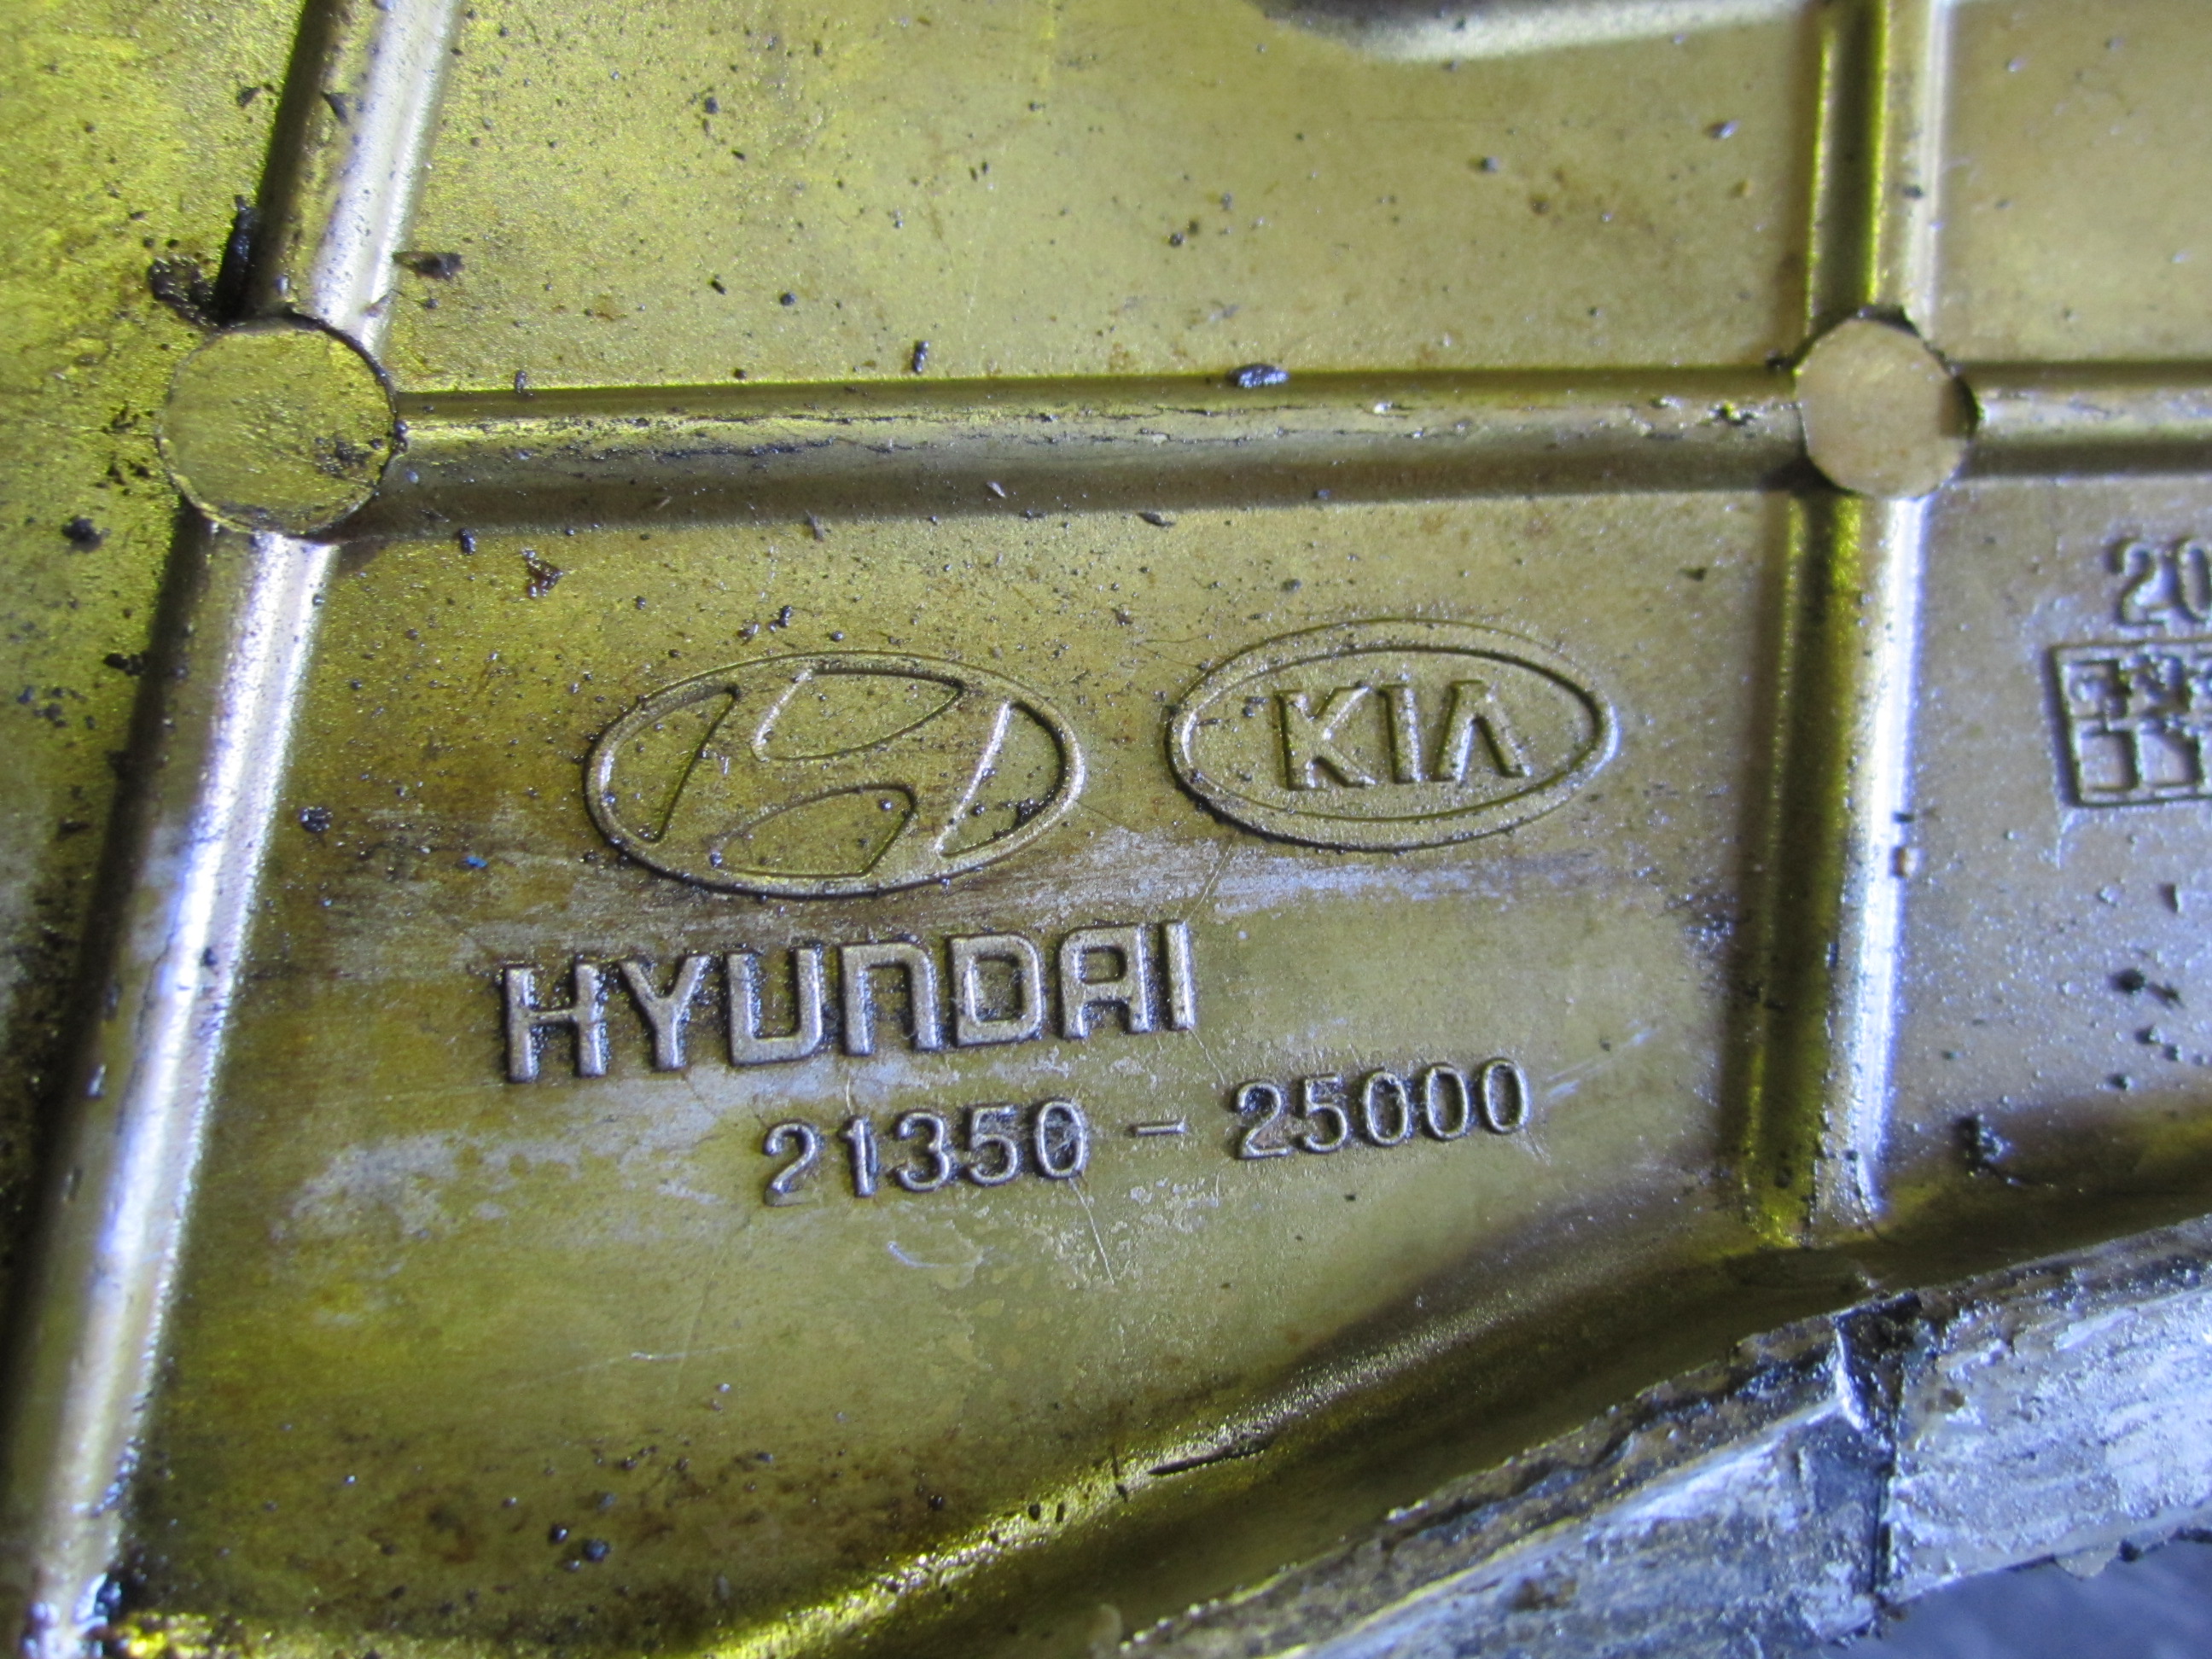 Крышка двигателя передняя : 21350-25000 на Kia Carens